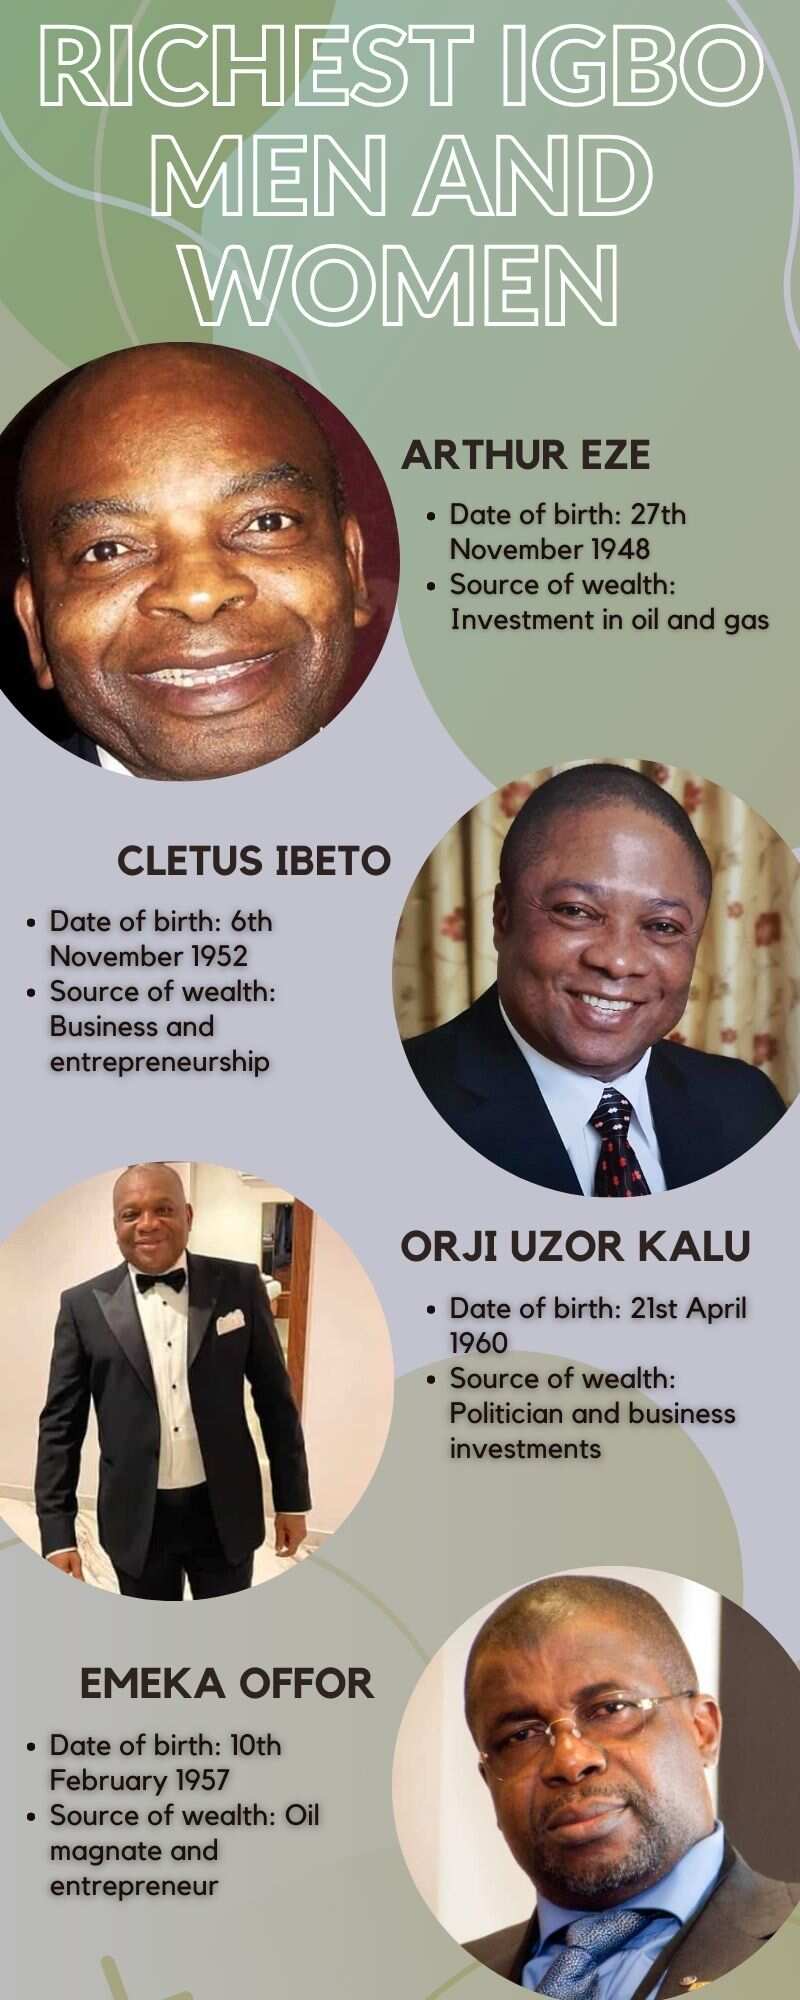 Richest Igbo men and women